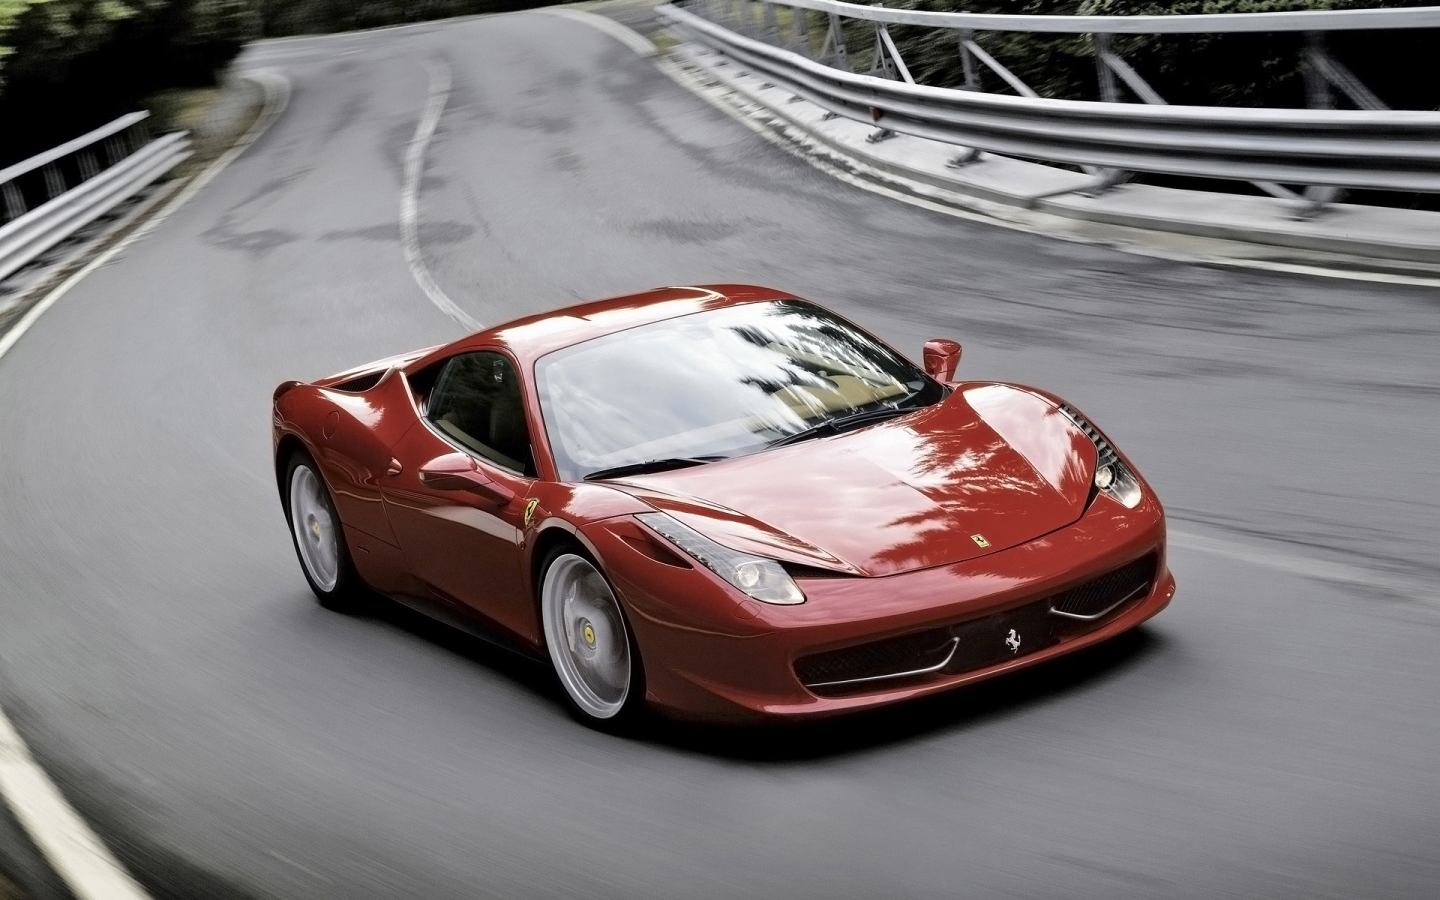 2011 Ferrari 458 Italia Red Speed for 1440 x 900 widescreen resolution